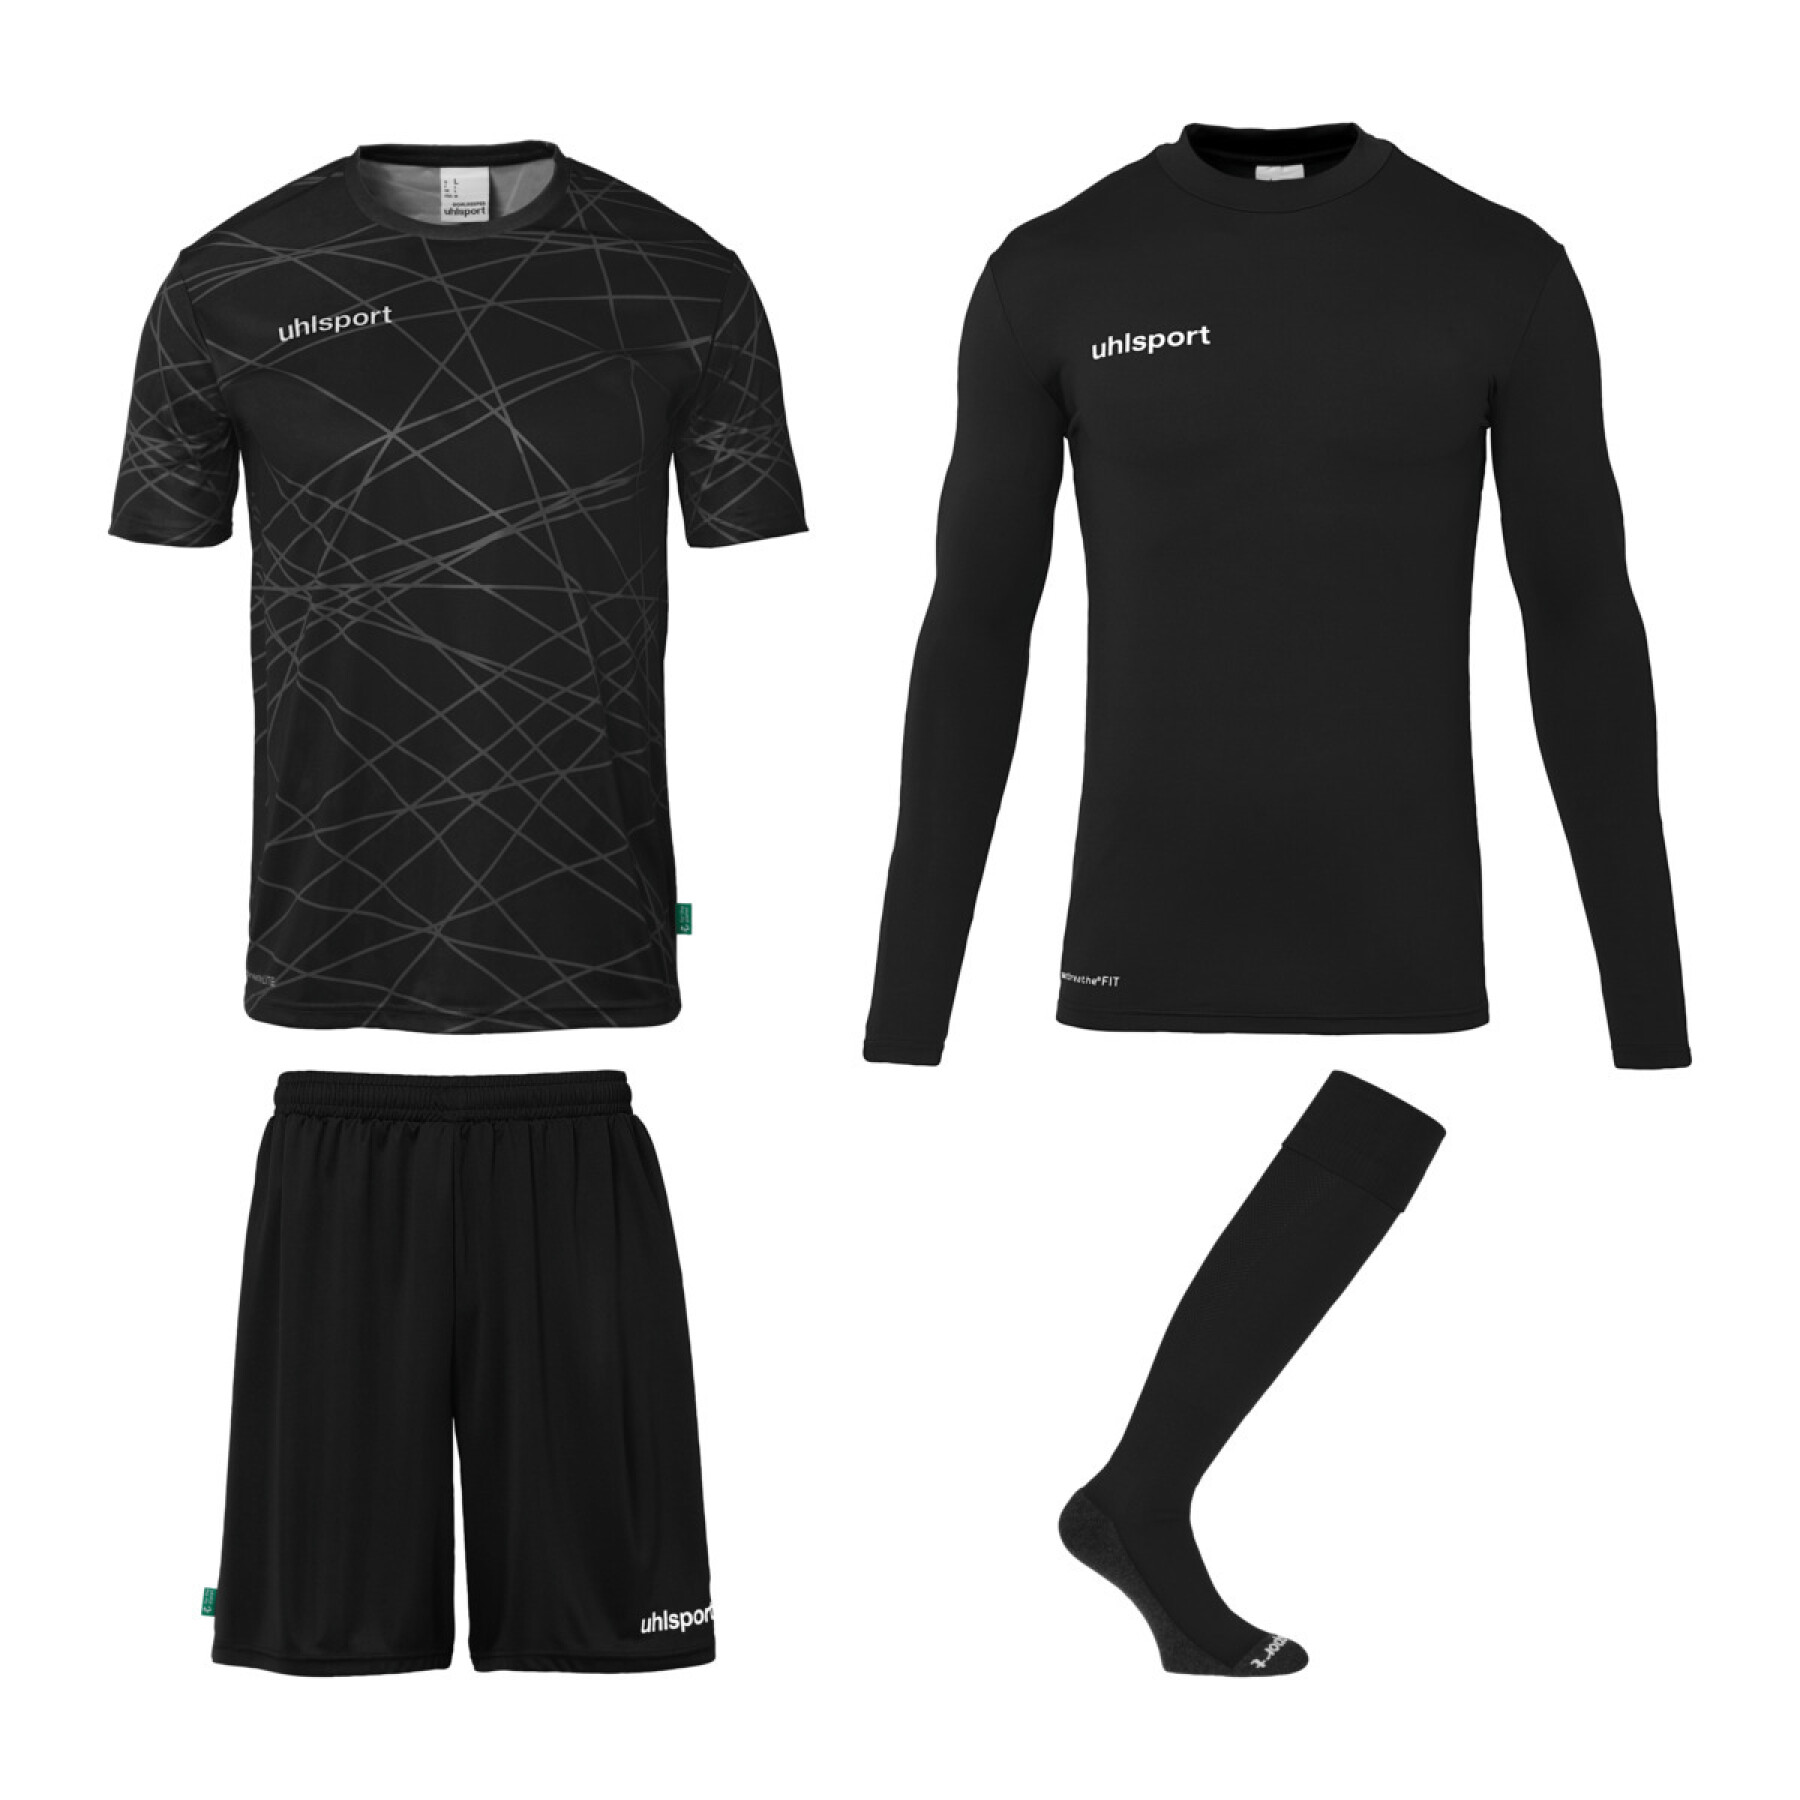 Goalkeeper jersey, shorts and socks set Uhlsport Prediction